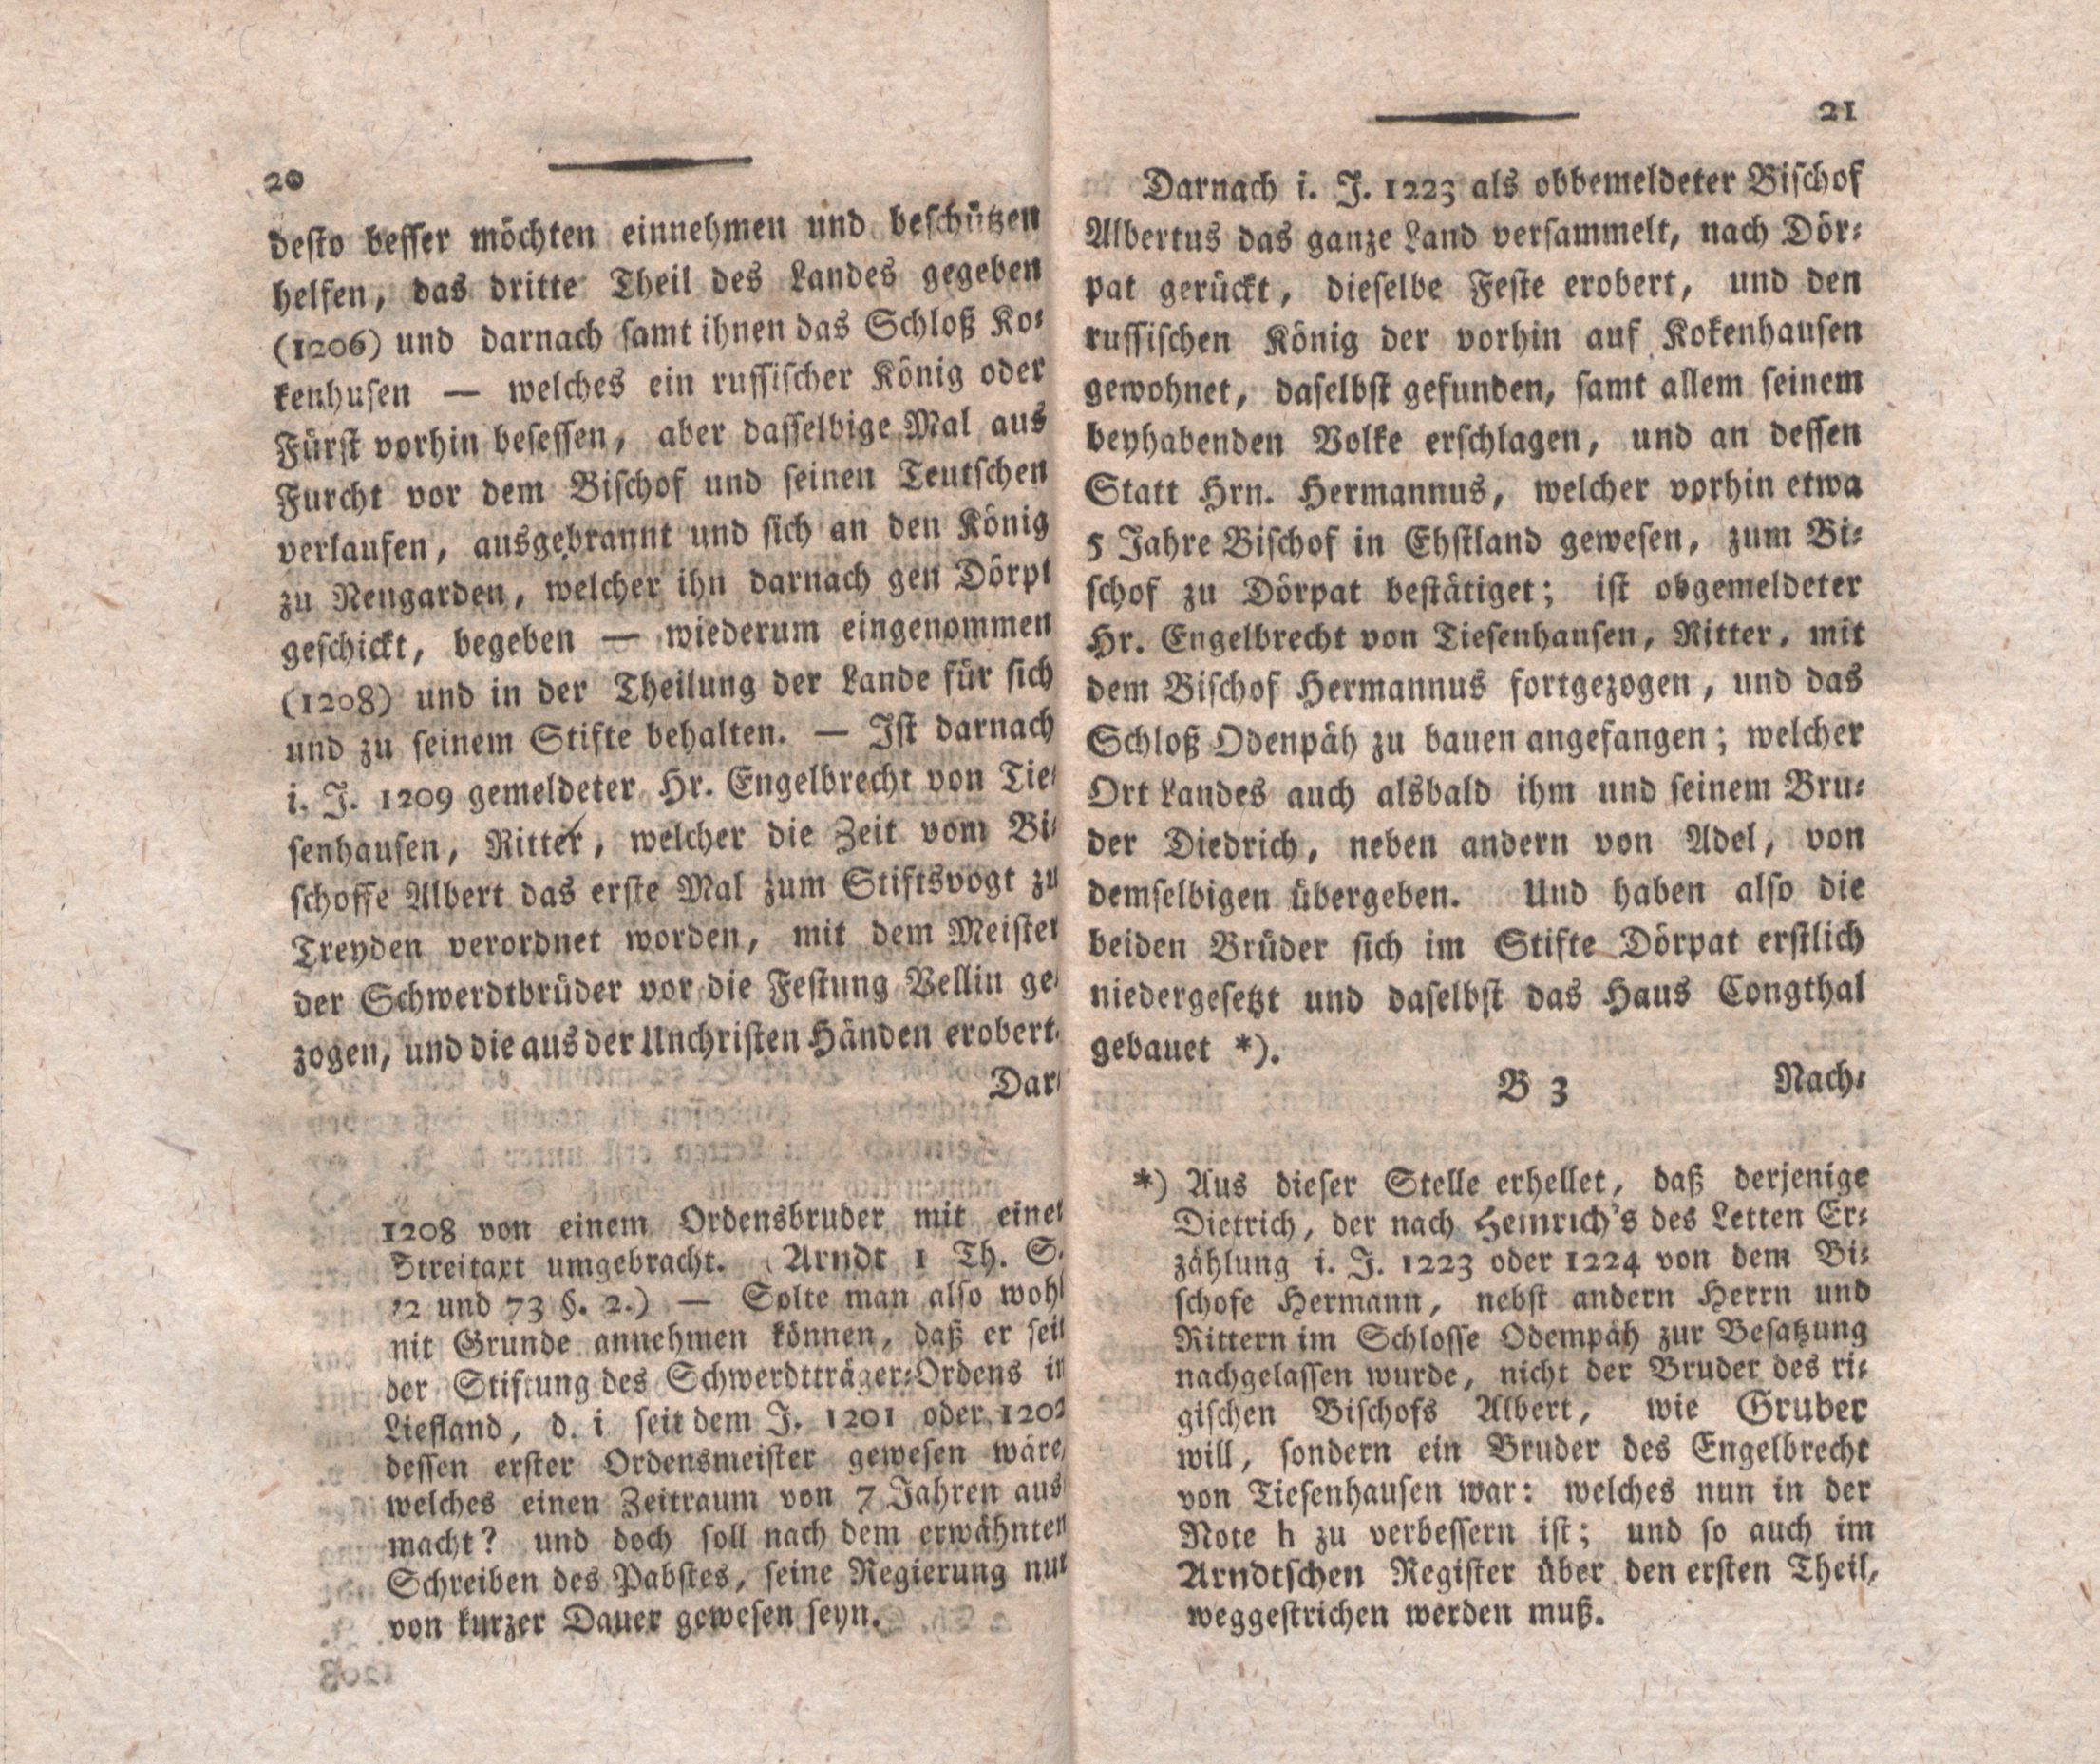 Neue nordische Miscellaneen [18] (1798) | 12. (20-21) Main body of text